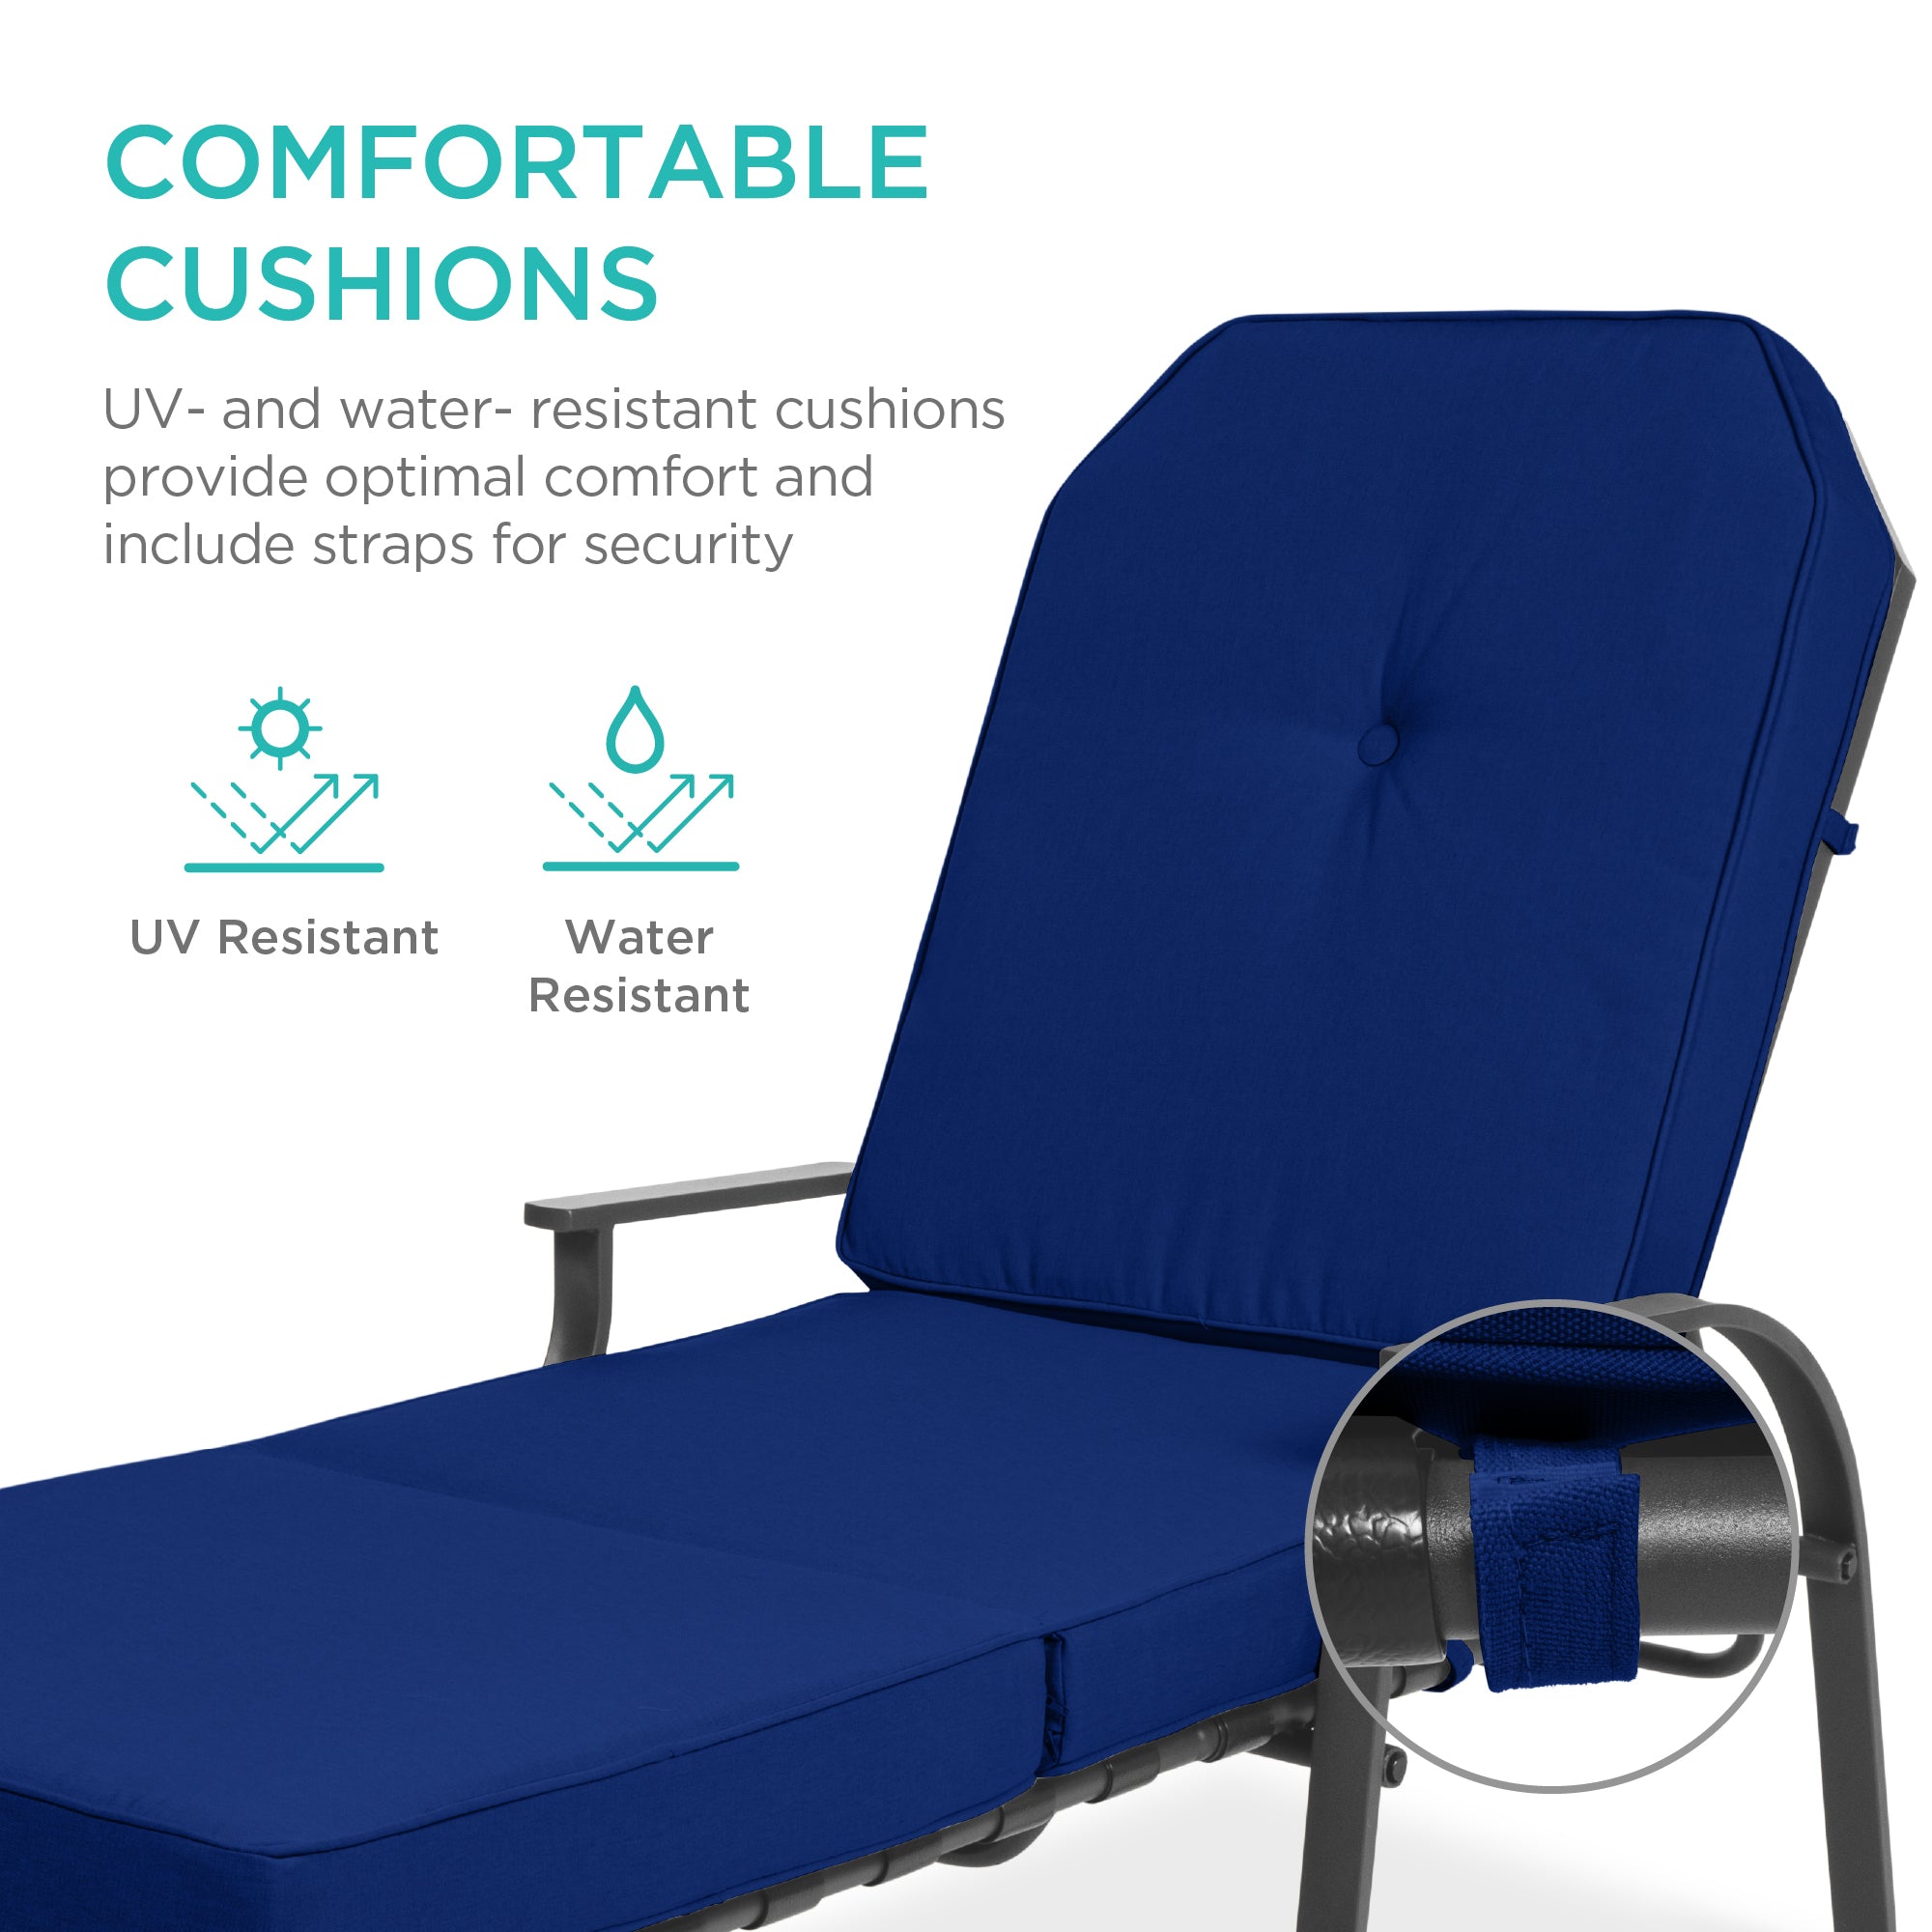 Chaise Lounge Recliner Chair w/ 2 Cushions